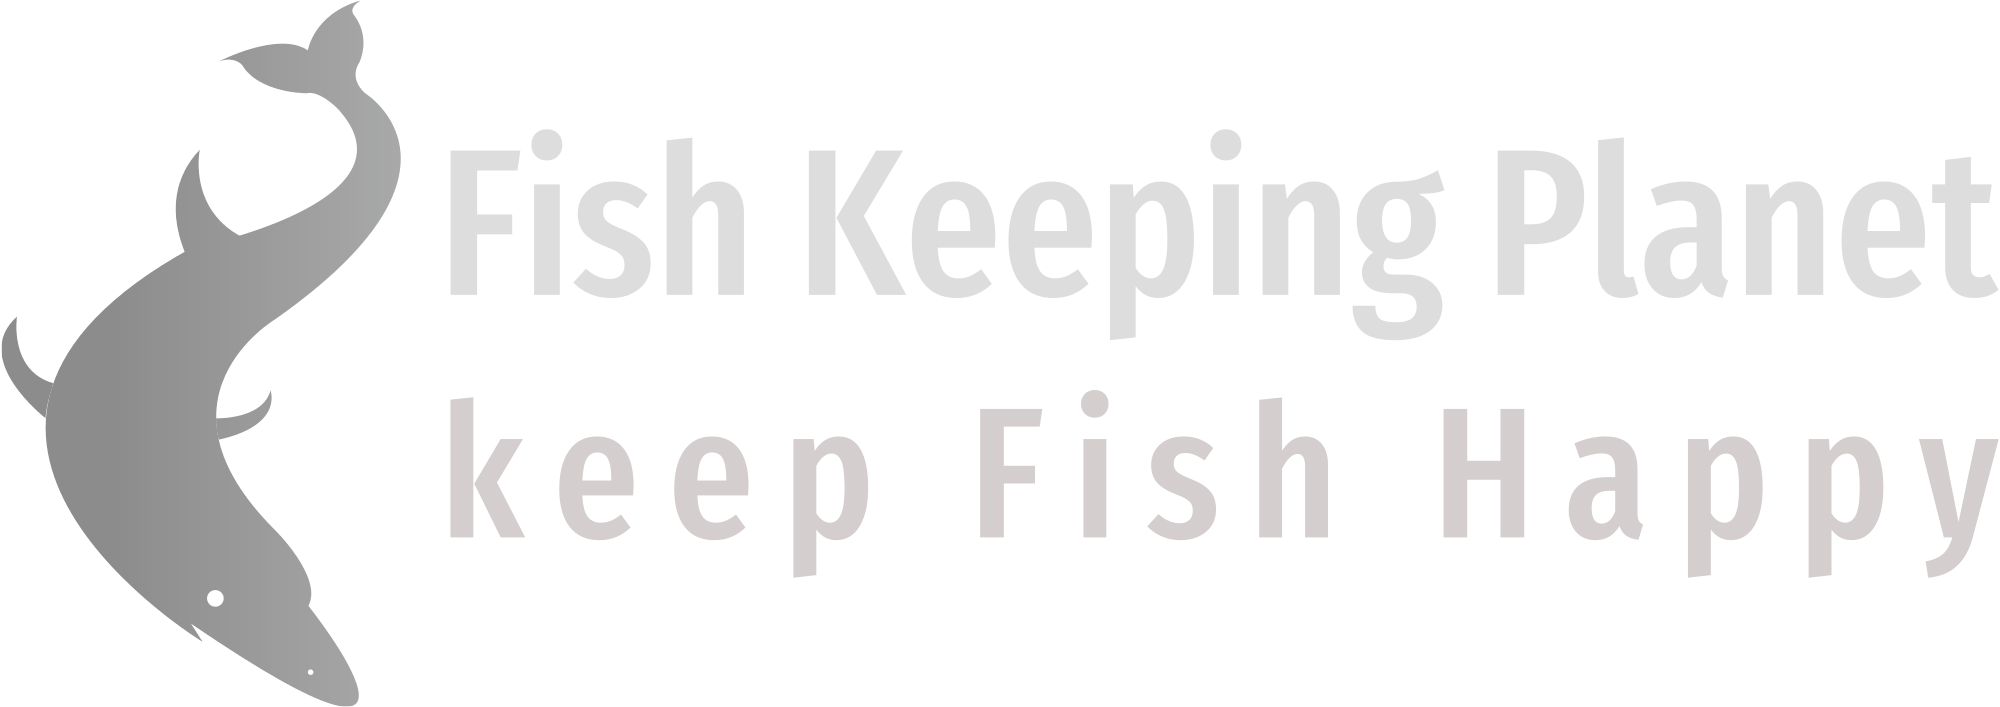 Fish Keeping Planet